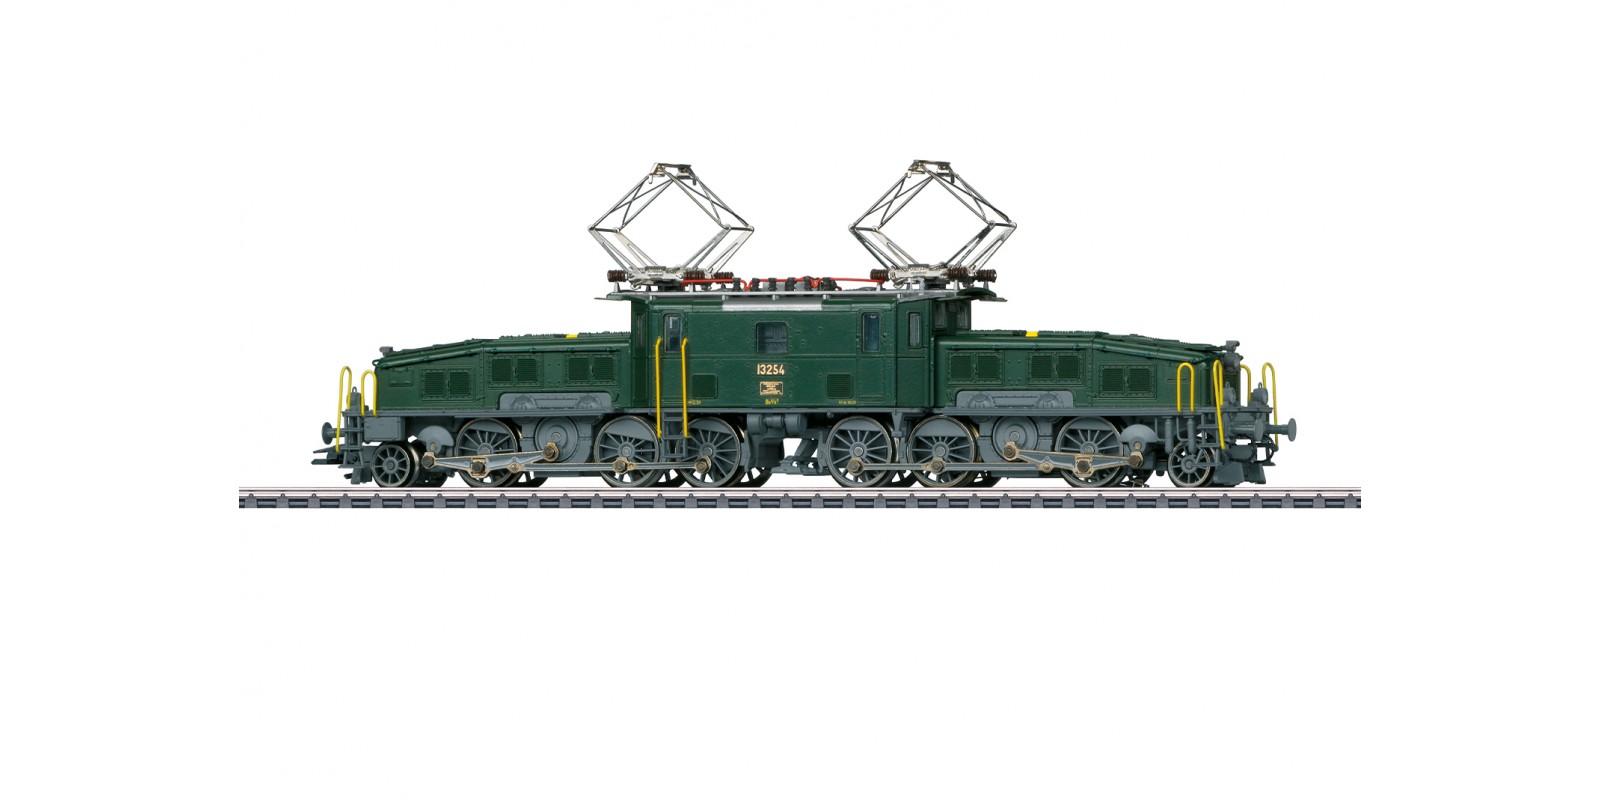 39596 Class Be 6/8 II Crocodile Electric Locomotive